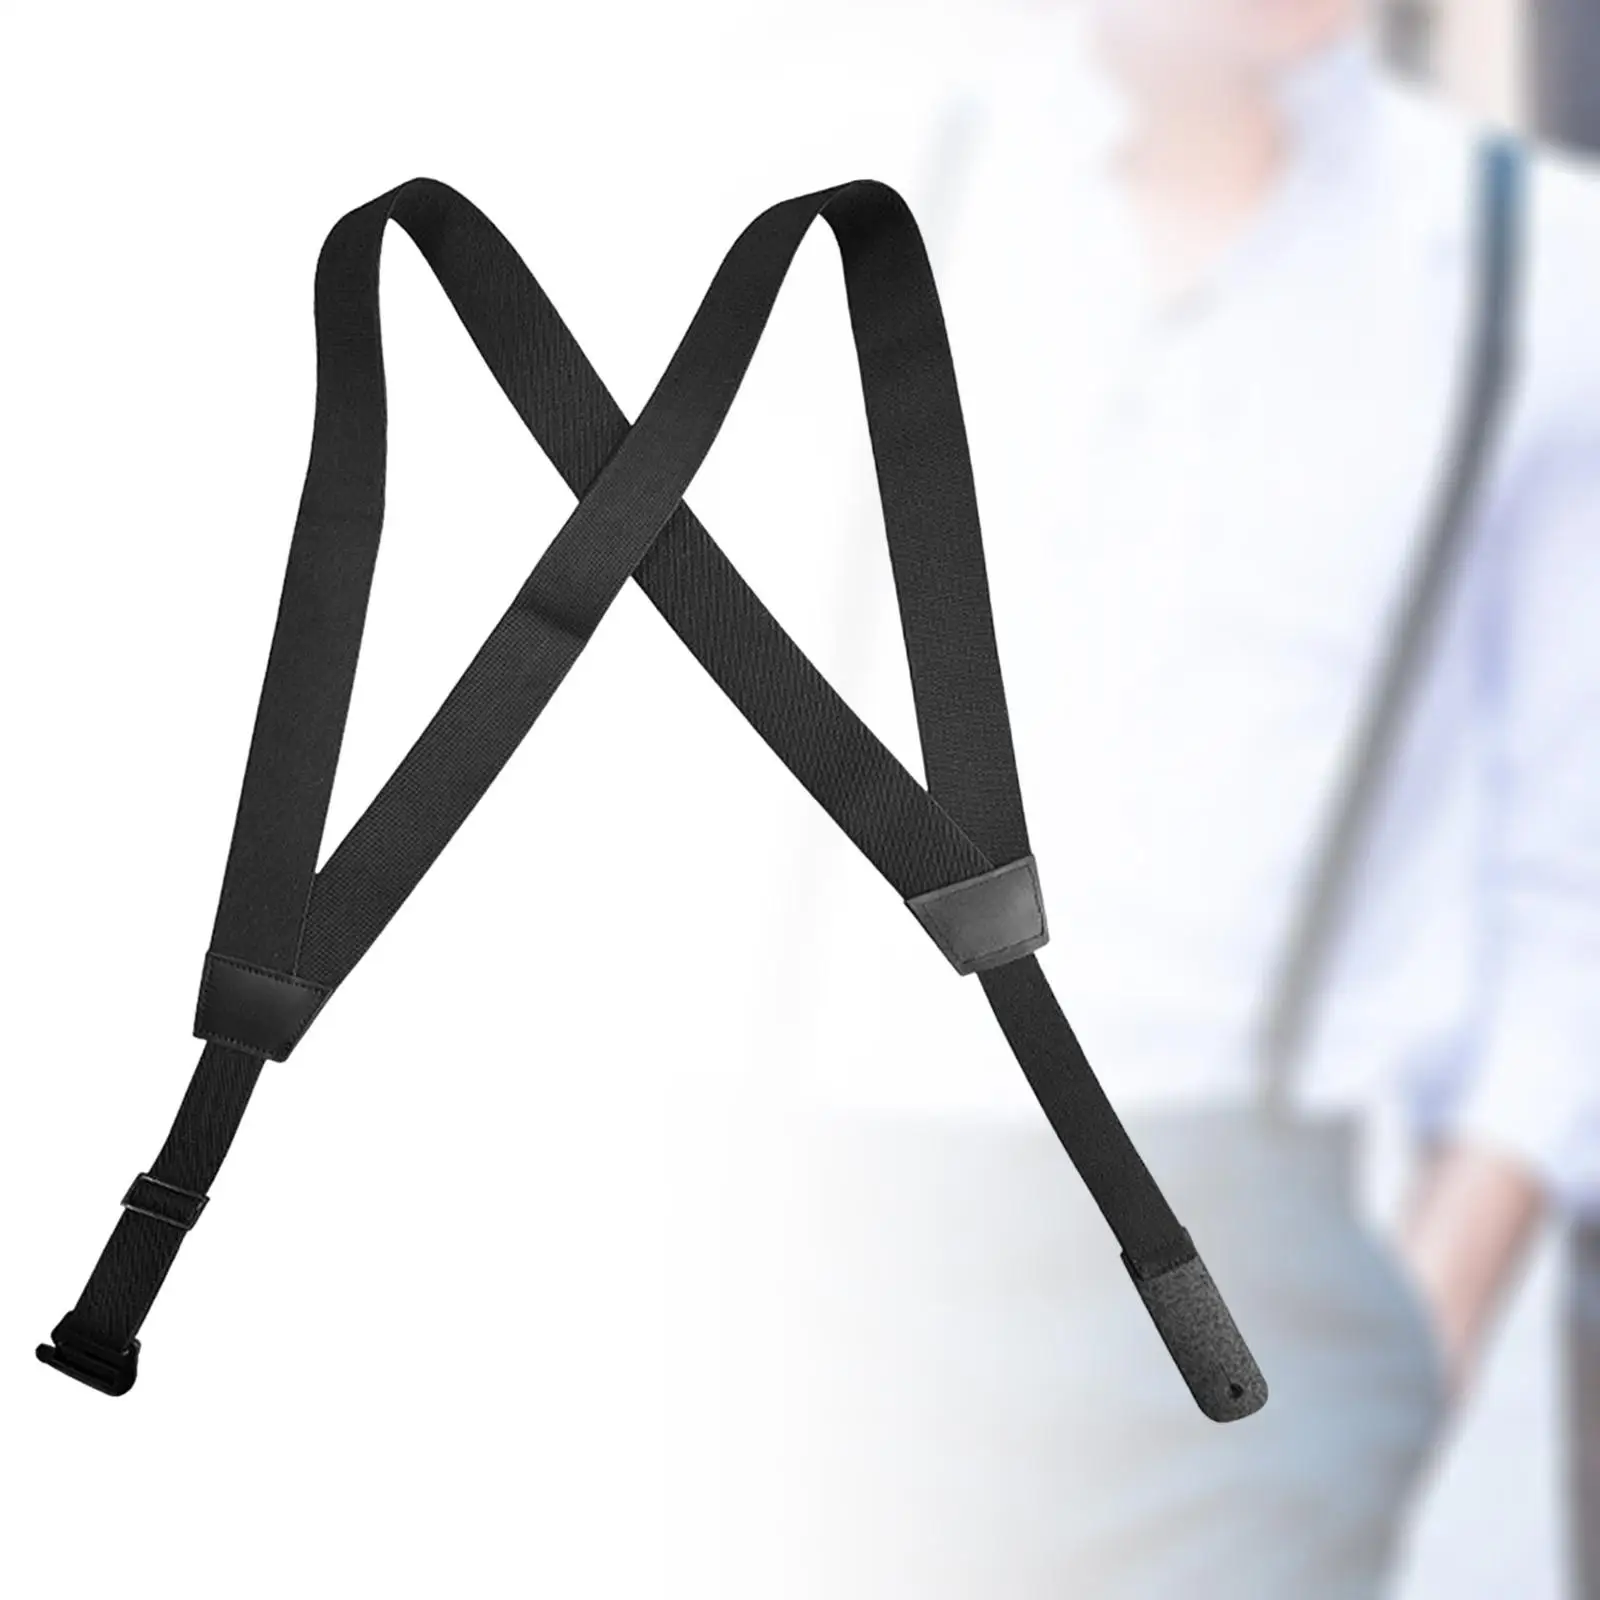 Mens Suspender Heavy Duty Suspenders Adjustable Side Clip Suspenders for Belt Loops Comfortable Pants Suspender Accessories